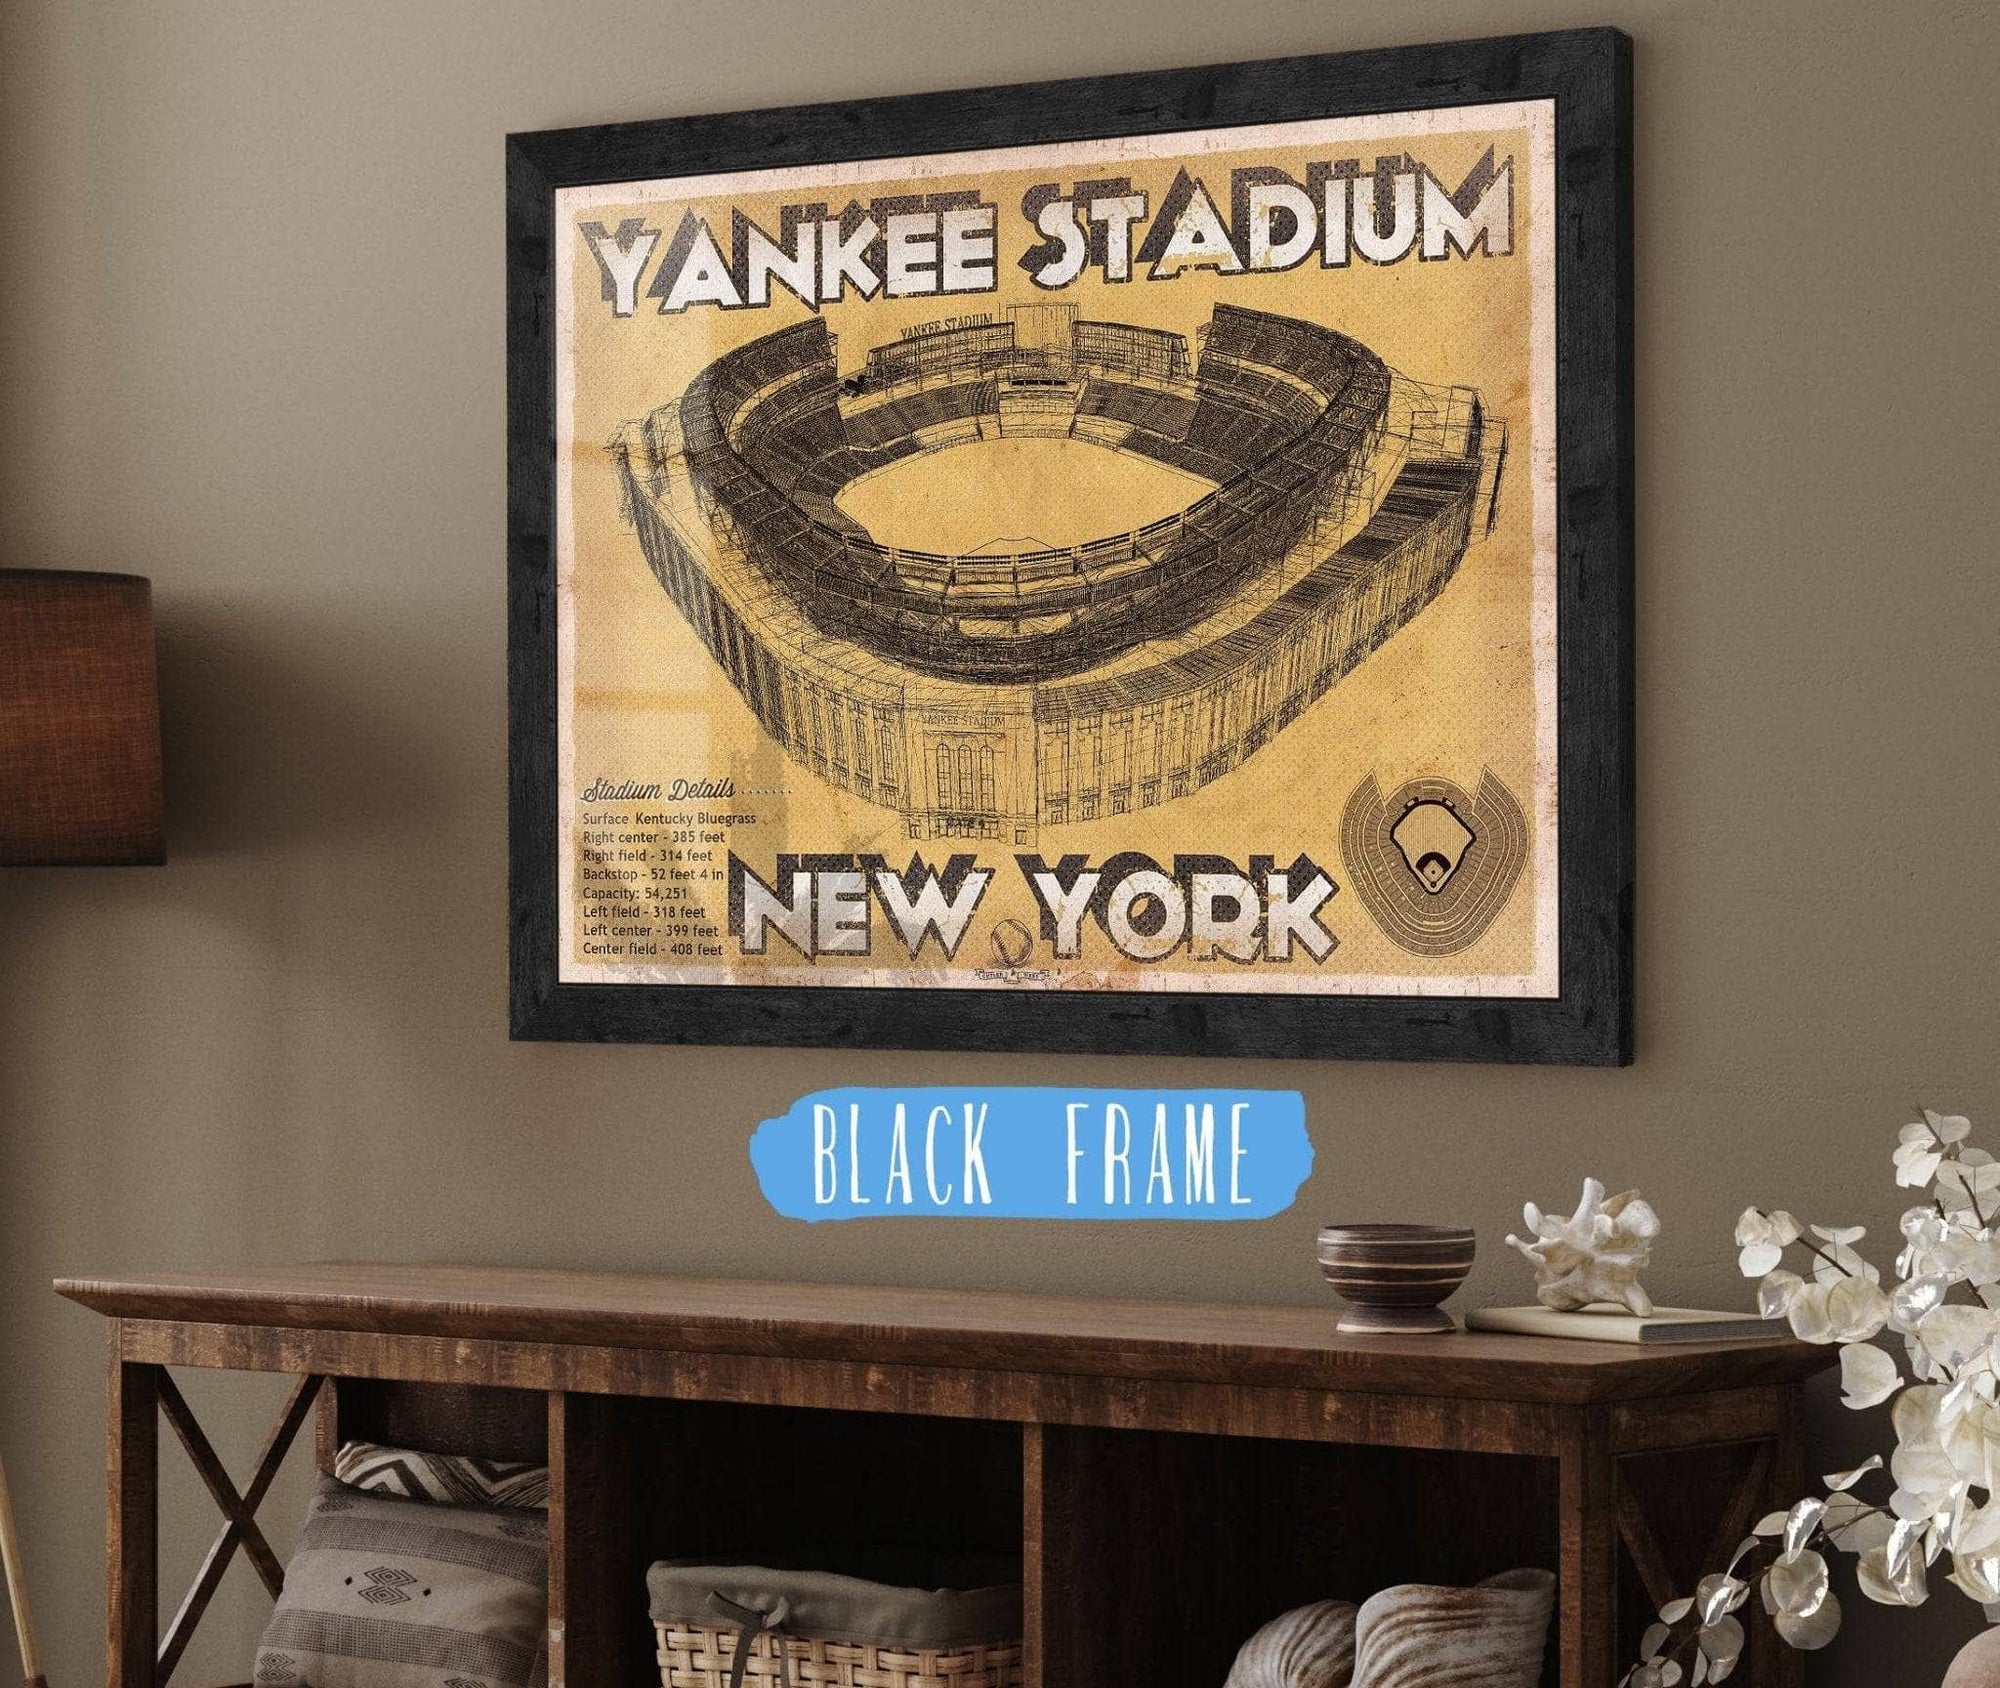 Cutler West Baseball Collection 14" x 11" / Black Frame NY Yankees - Vintage Yankee Stadium Blueprint Baseball Print 715530501